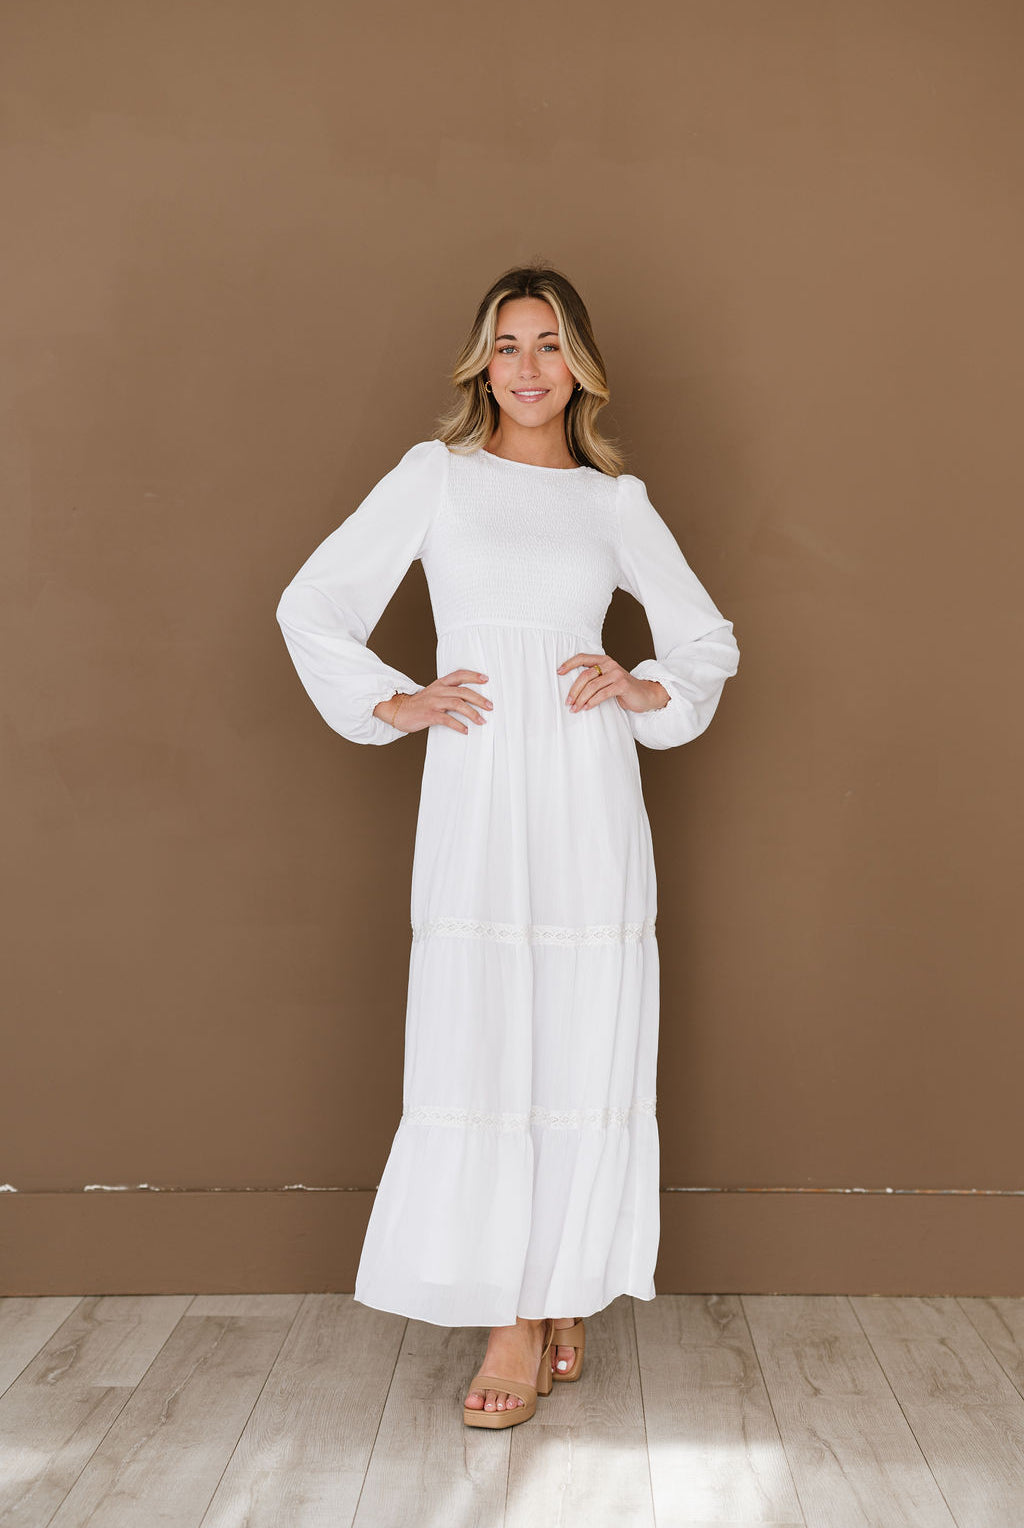 White Lds temple dress